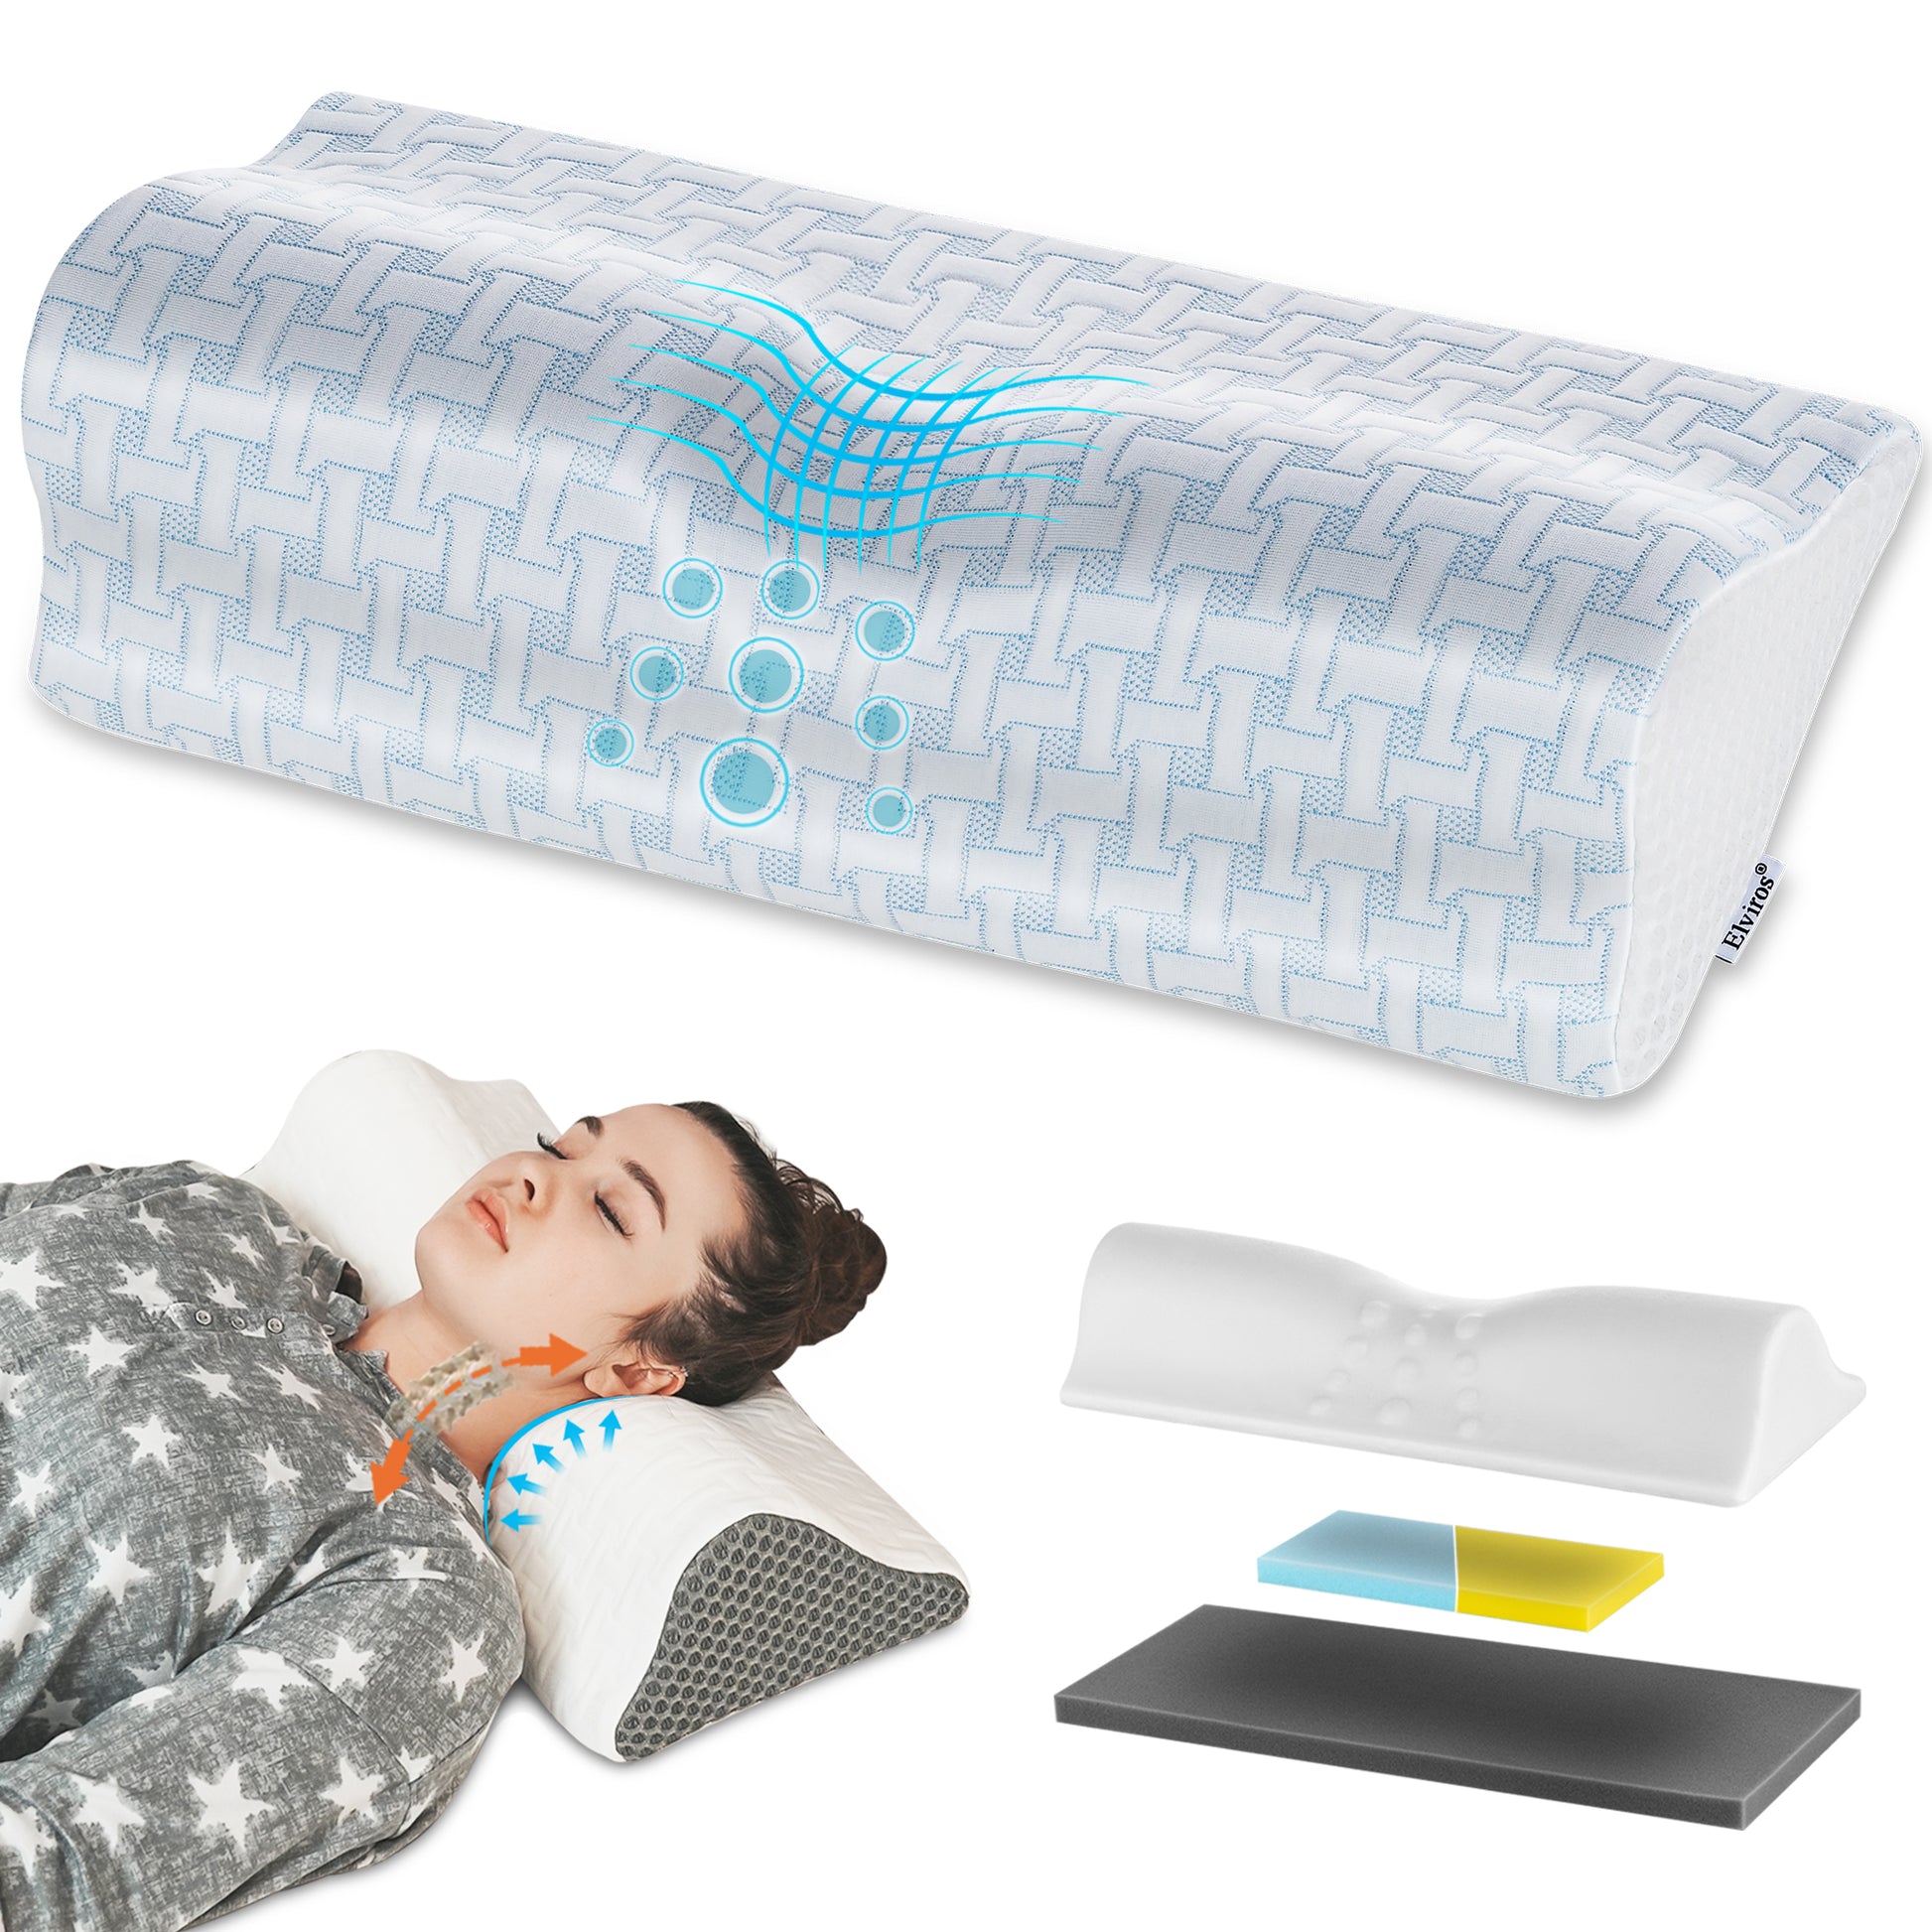 Memory Foam Travel Pillow Orthopedic Contour Design with 360